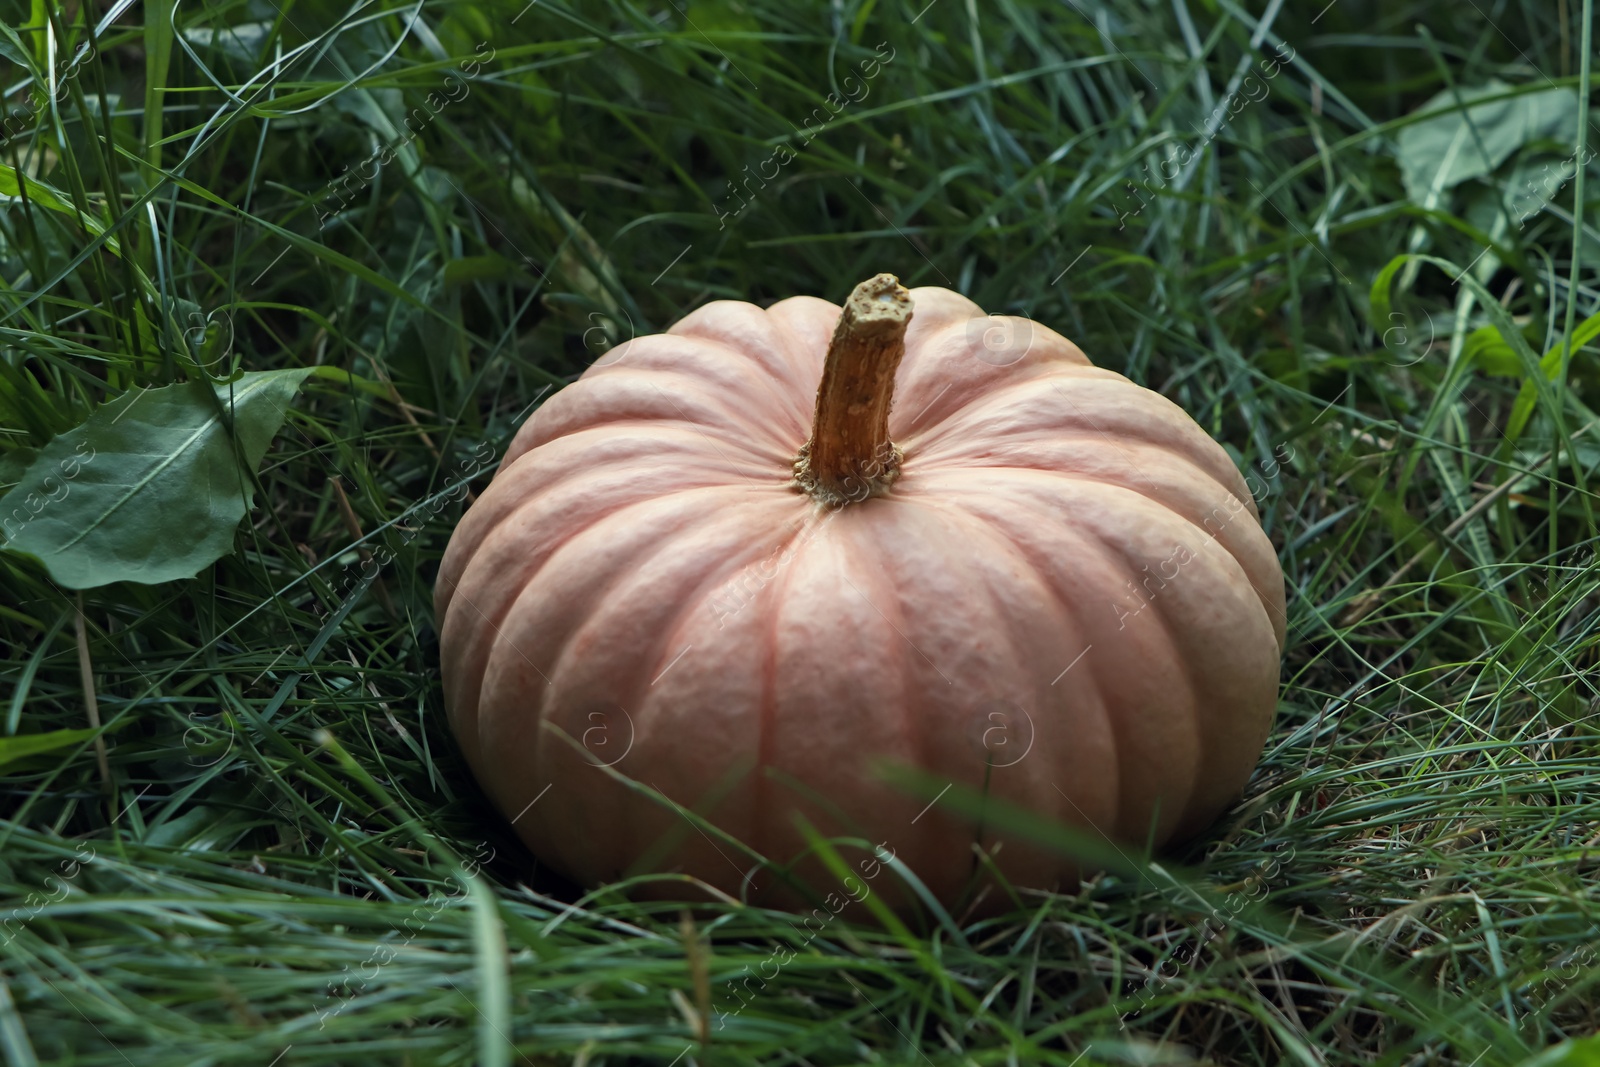 Photo of Whole ripe pumpkin among green grass outdoors